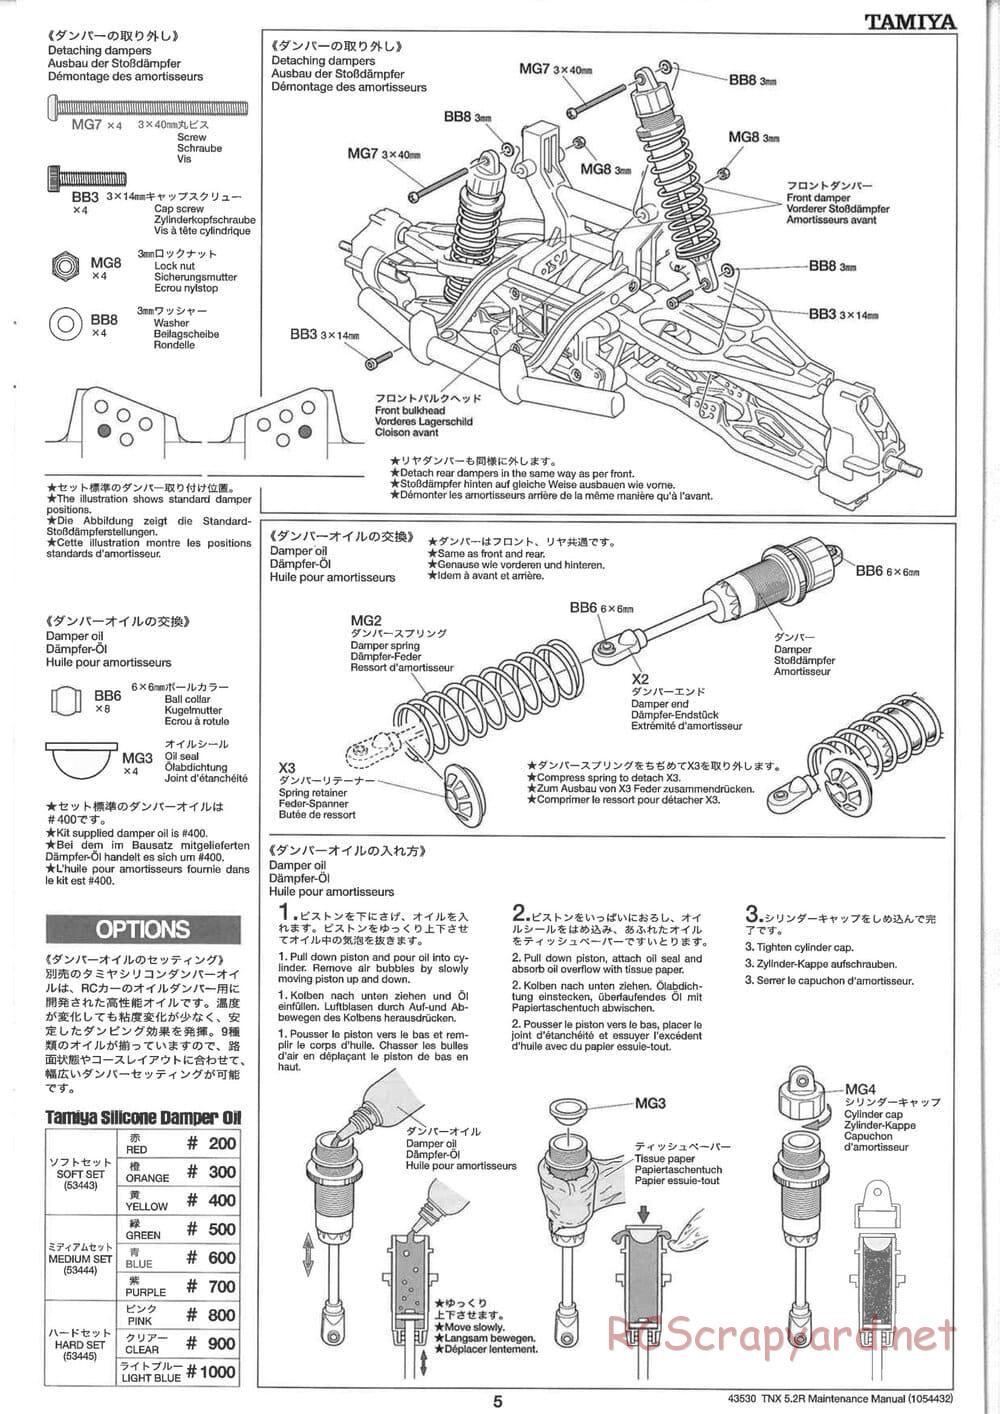 Tamiya - TNX 5.2R - TGM-04 - Maintenance Manual - Page 5